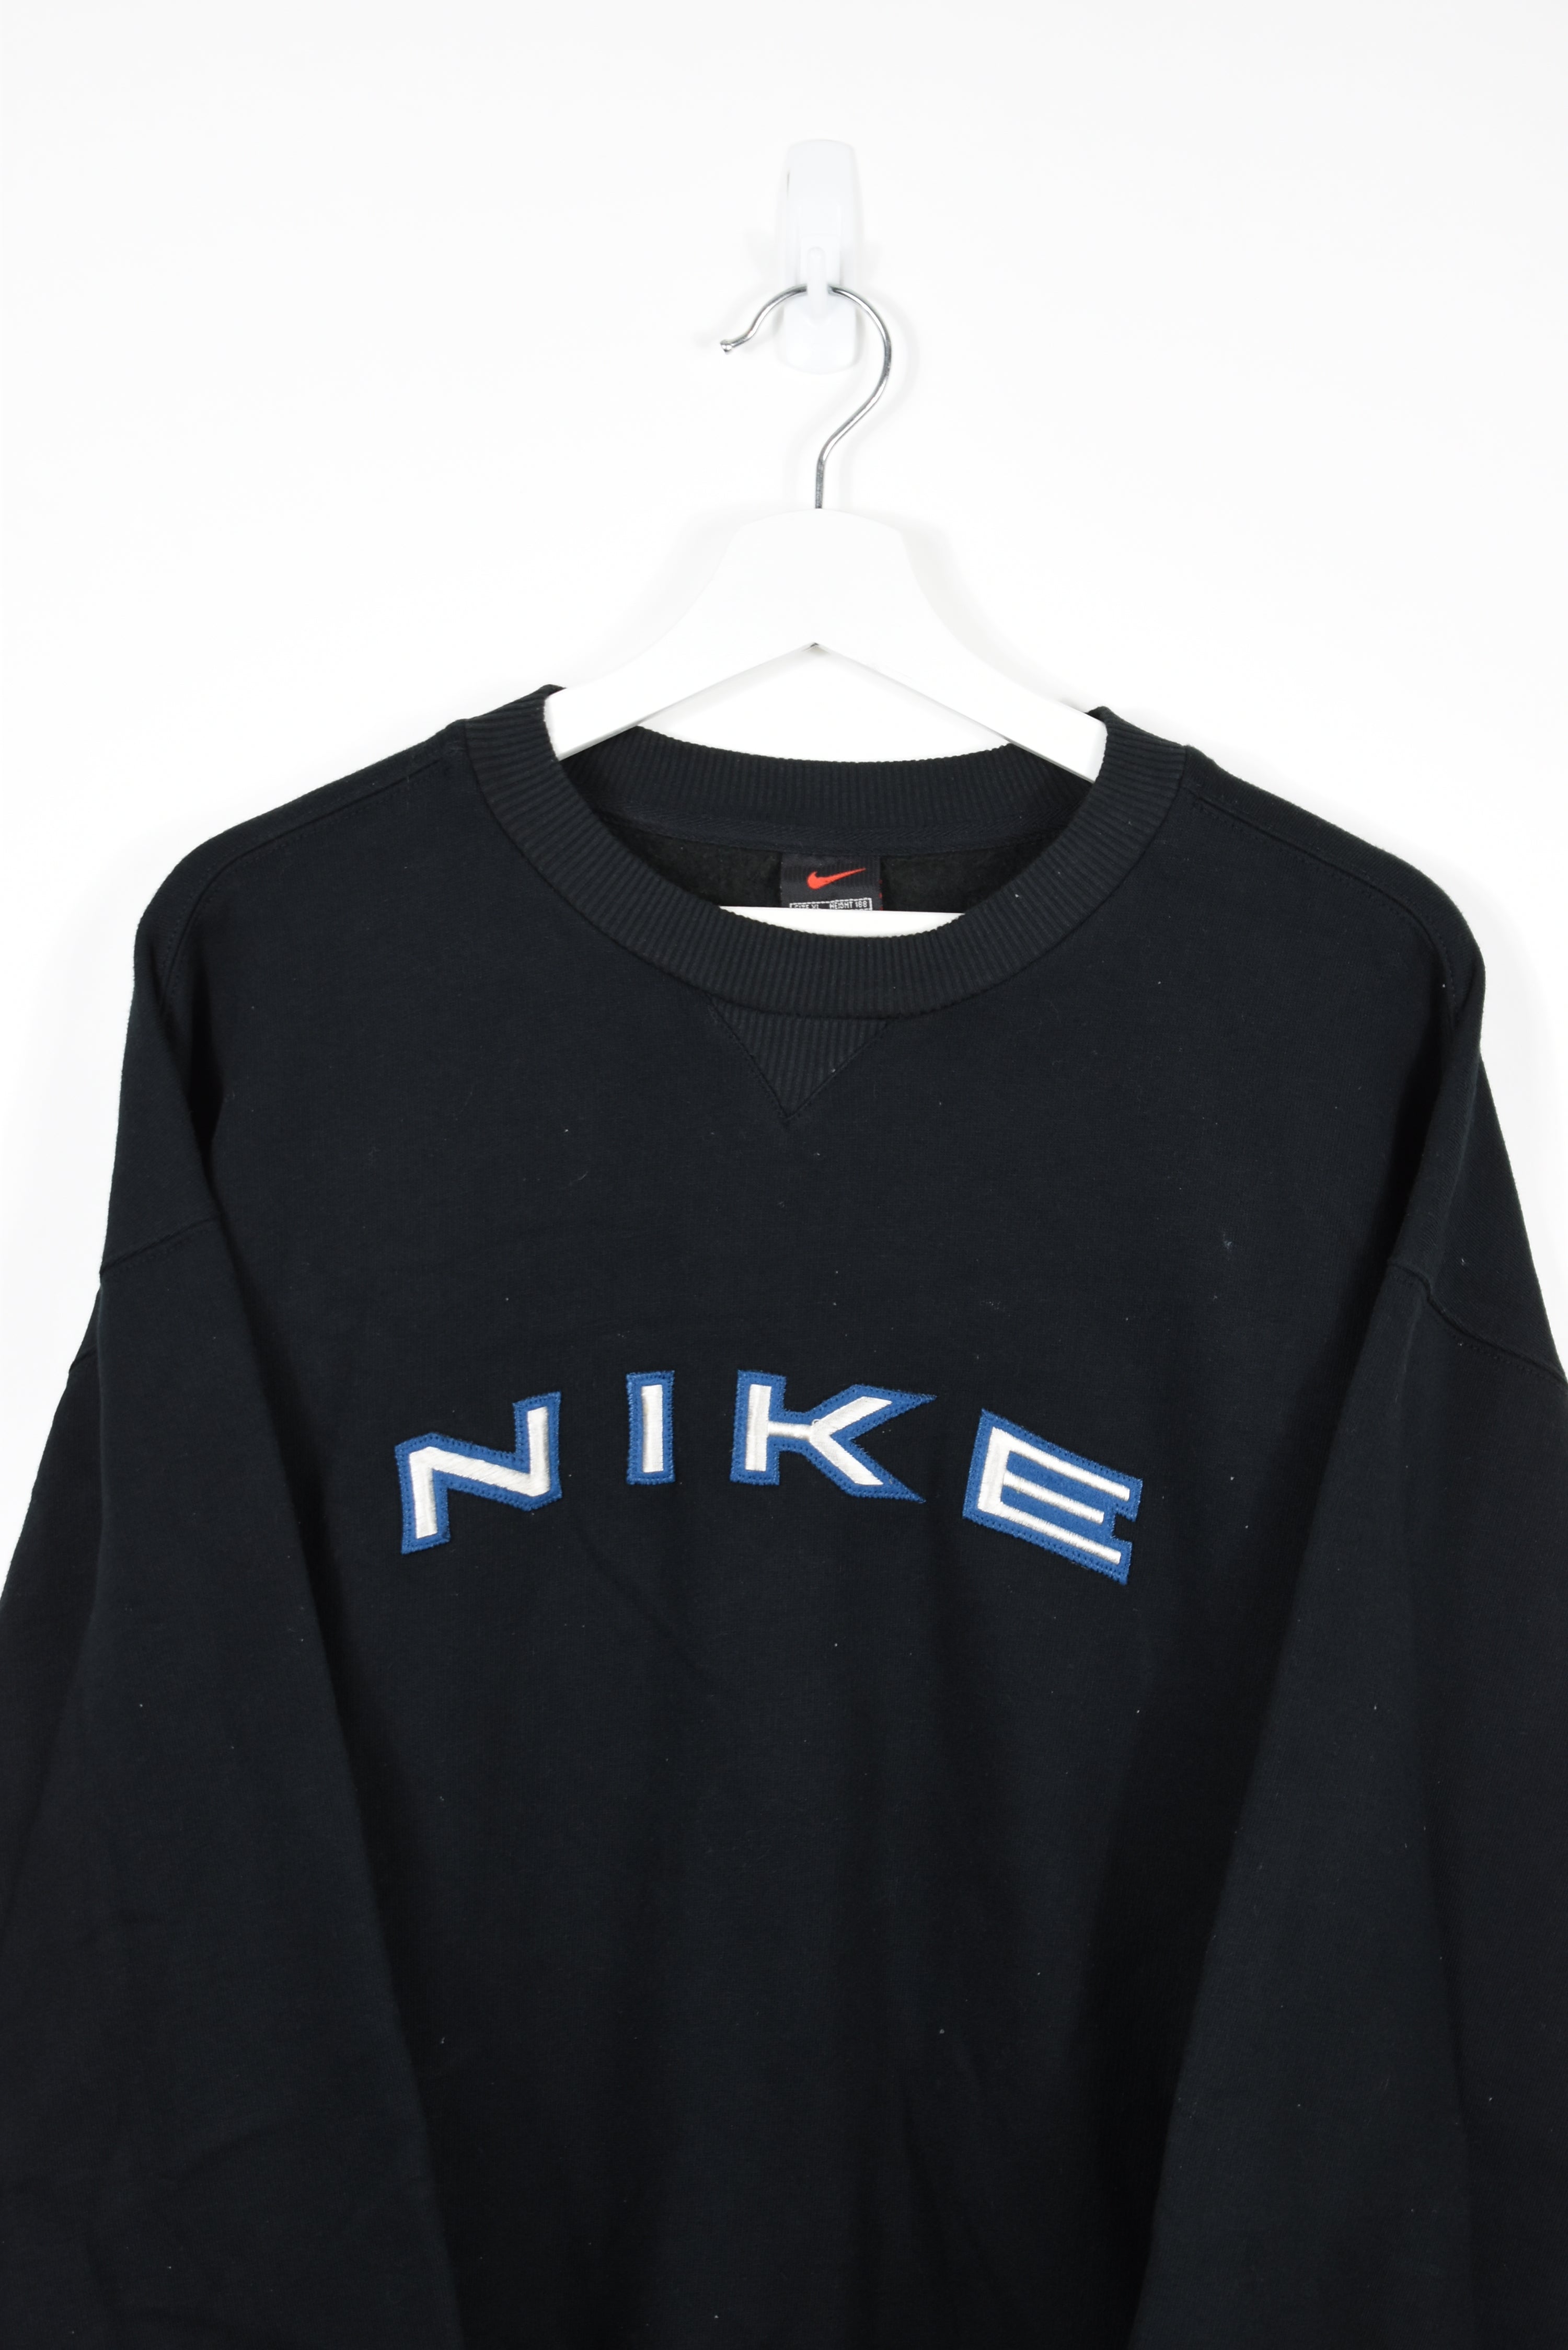 Vintage Nike Embroidered Sweatshirt Xlarge